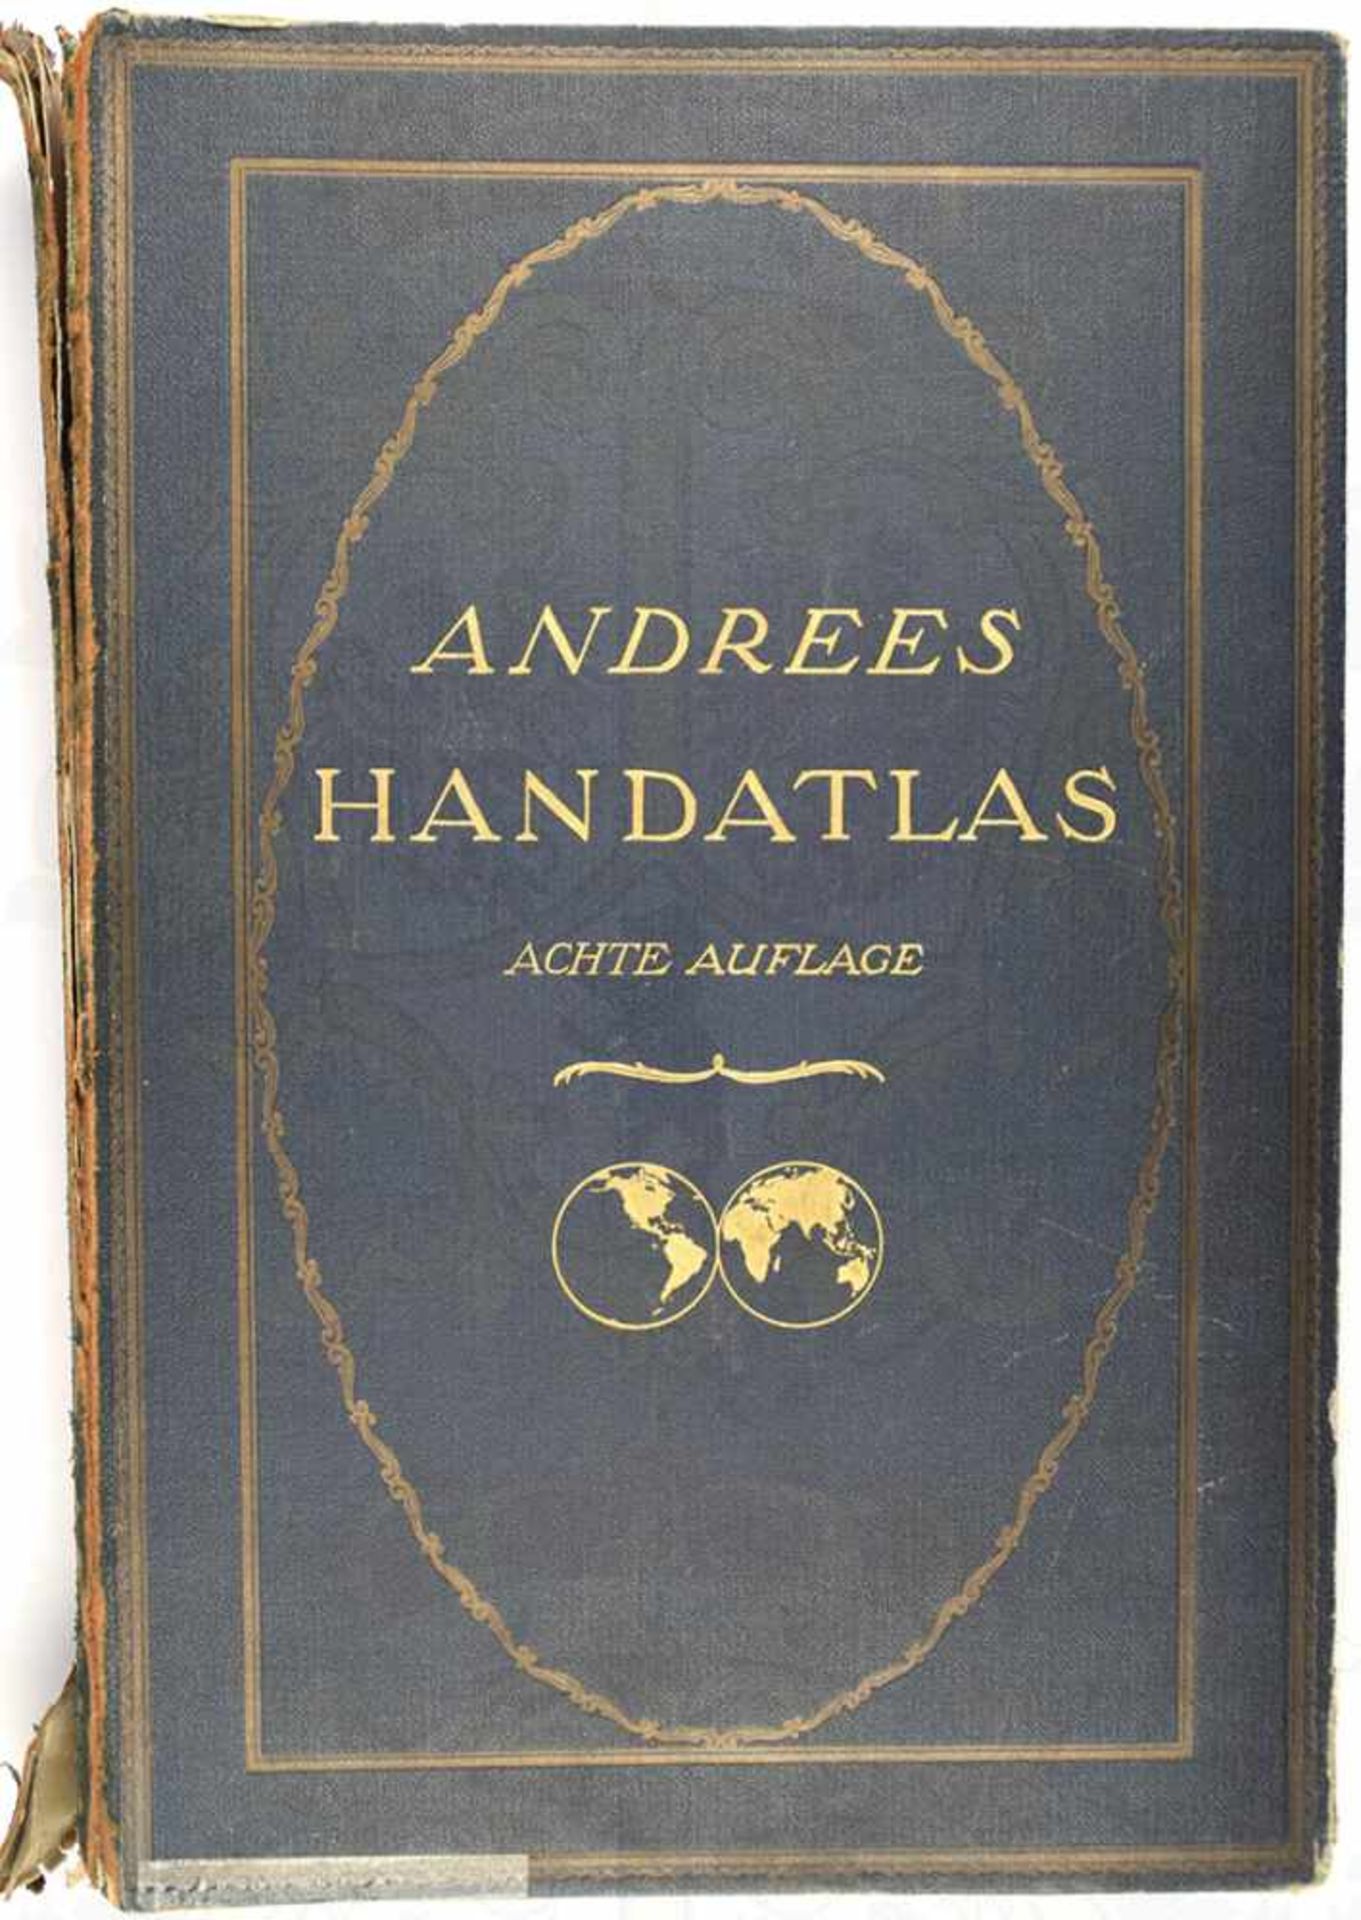 ANDREES HANDATLAS, 8. Auflage, Velhagen & Klasing, Leipzig 1930, 231 Haupt- u. Nebenkarten (